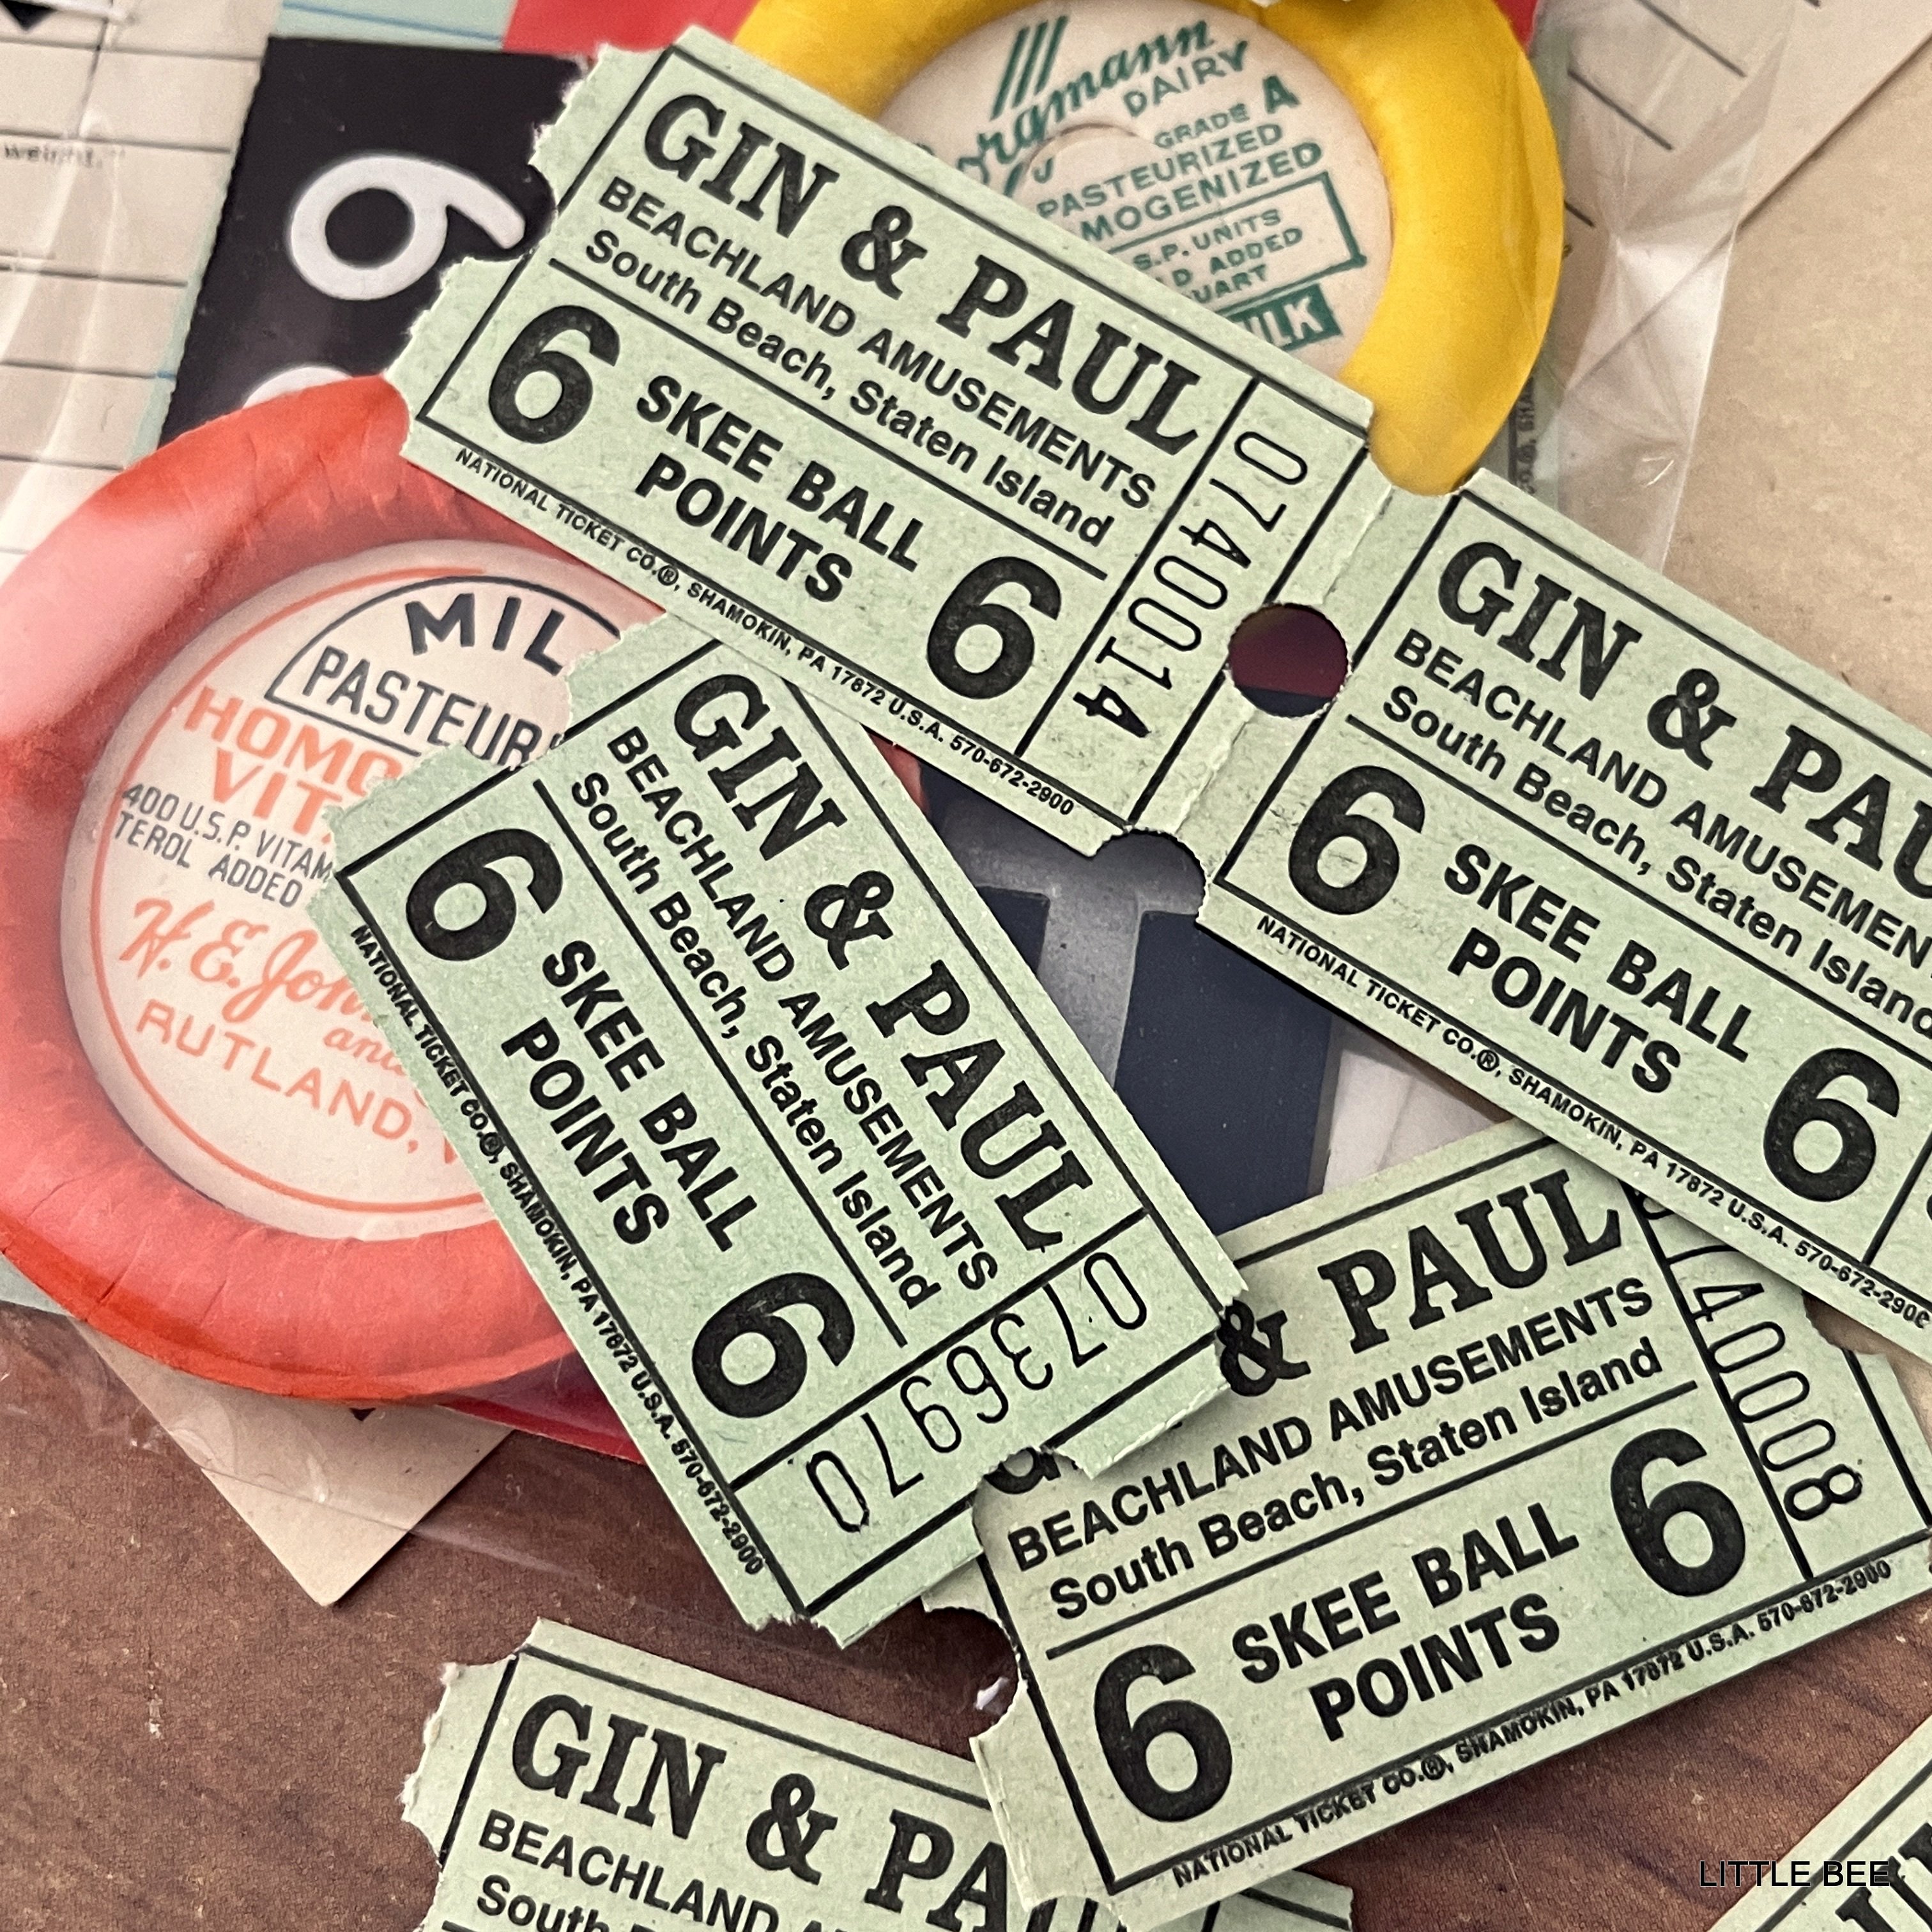 R 999 Gin Paul スキーボールチケット リトルビー 海外の紙もの 雑貨 スタンプ 文具 アンティーク